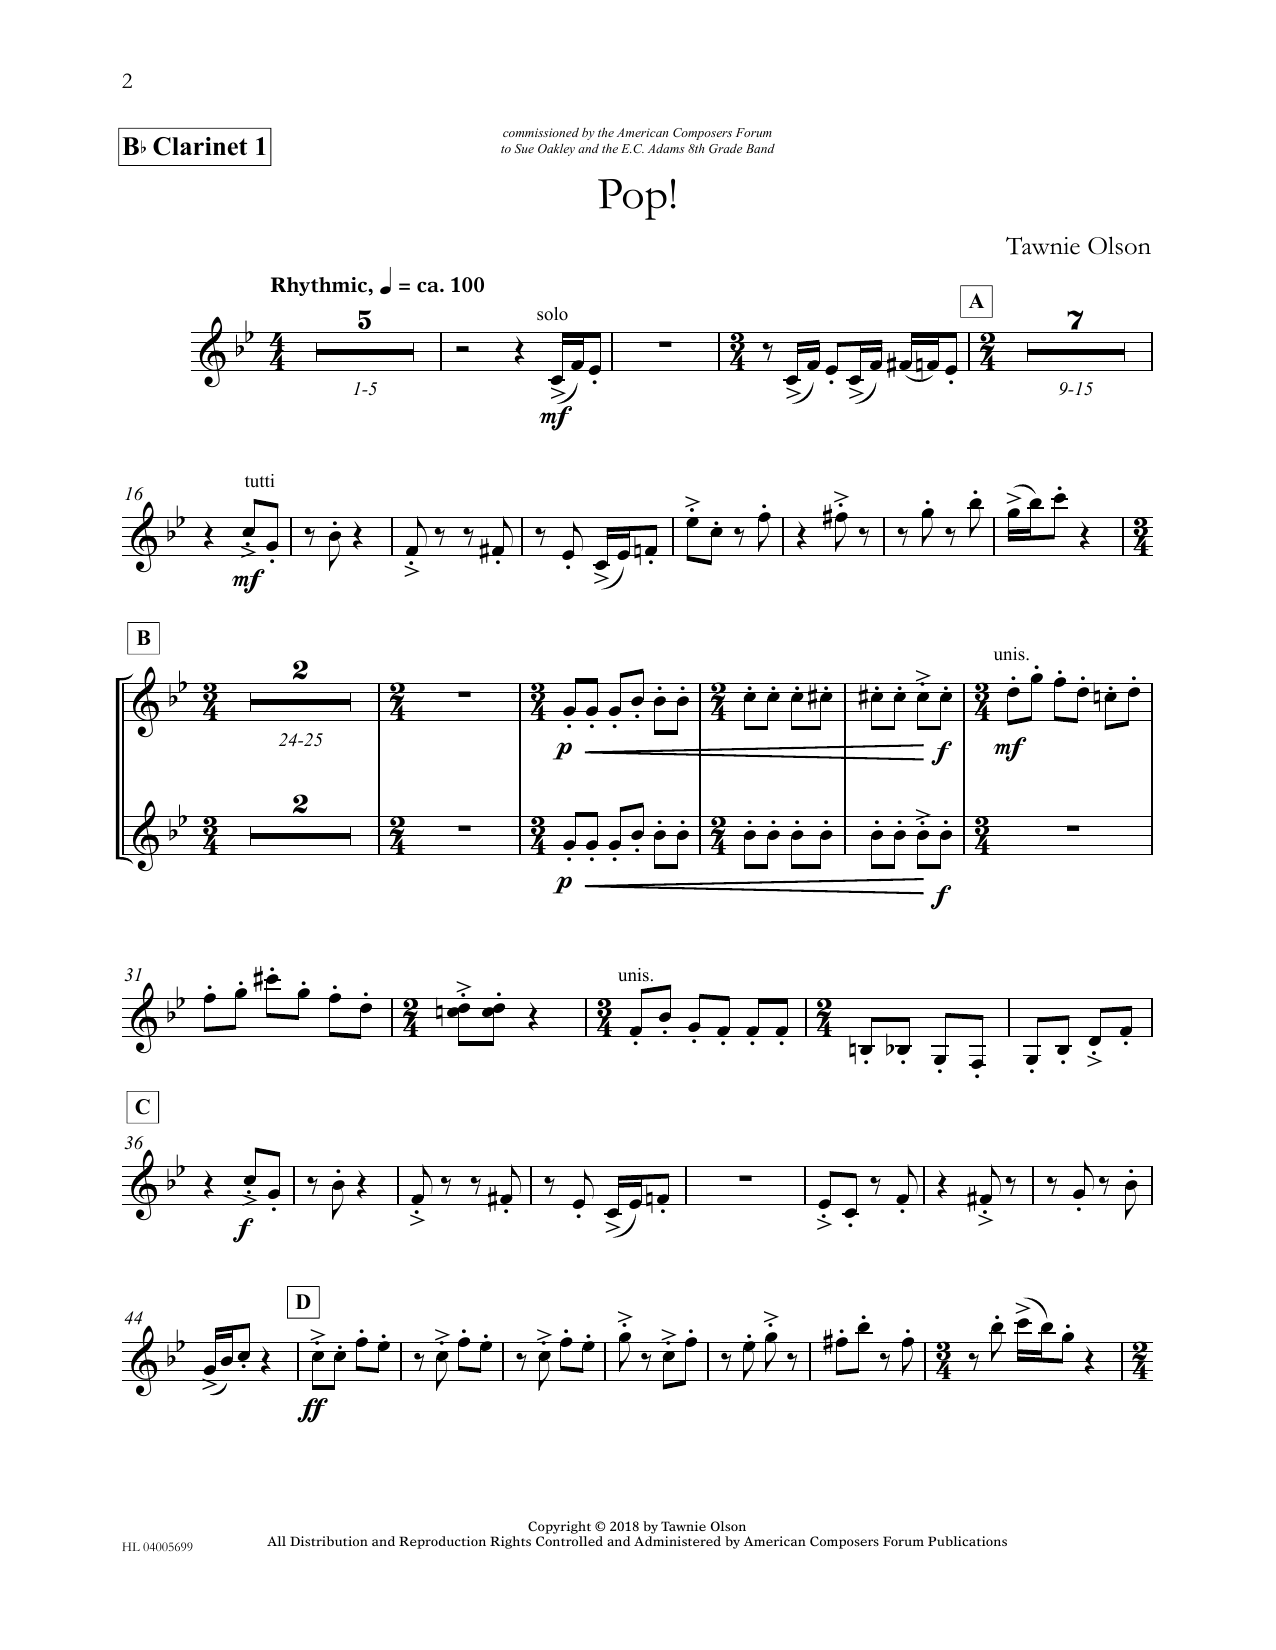 Download Tawnie Olson Pop! - Bb Clarinet 1 (Divisi) Sheet Music